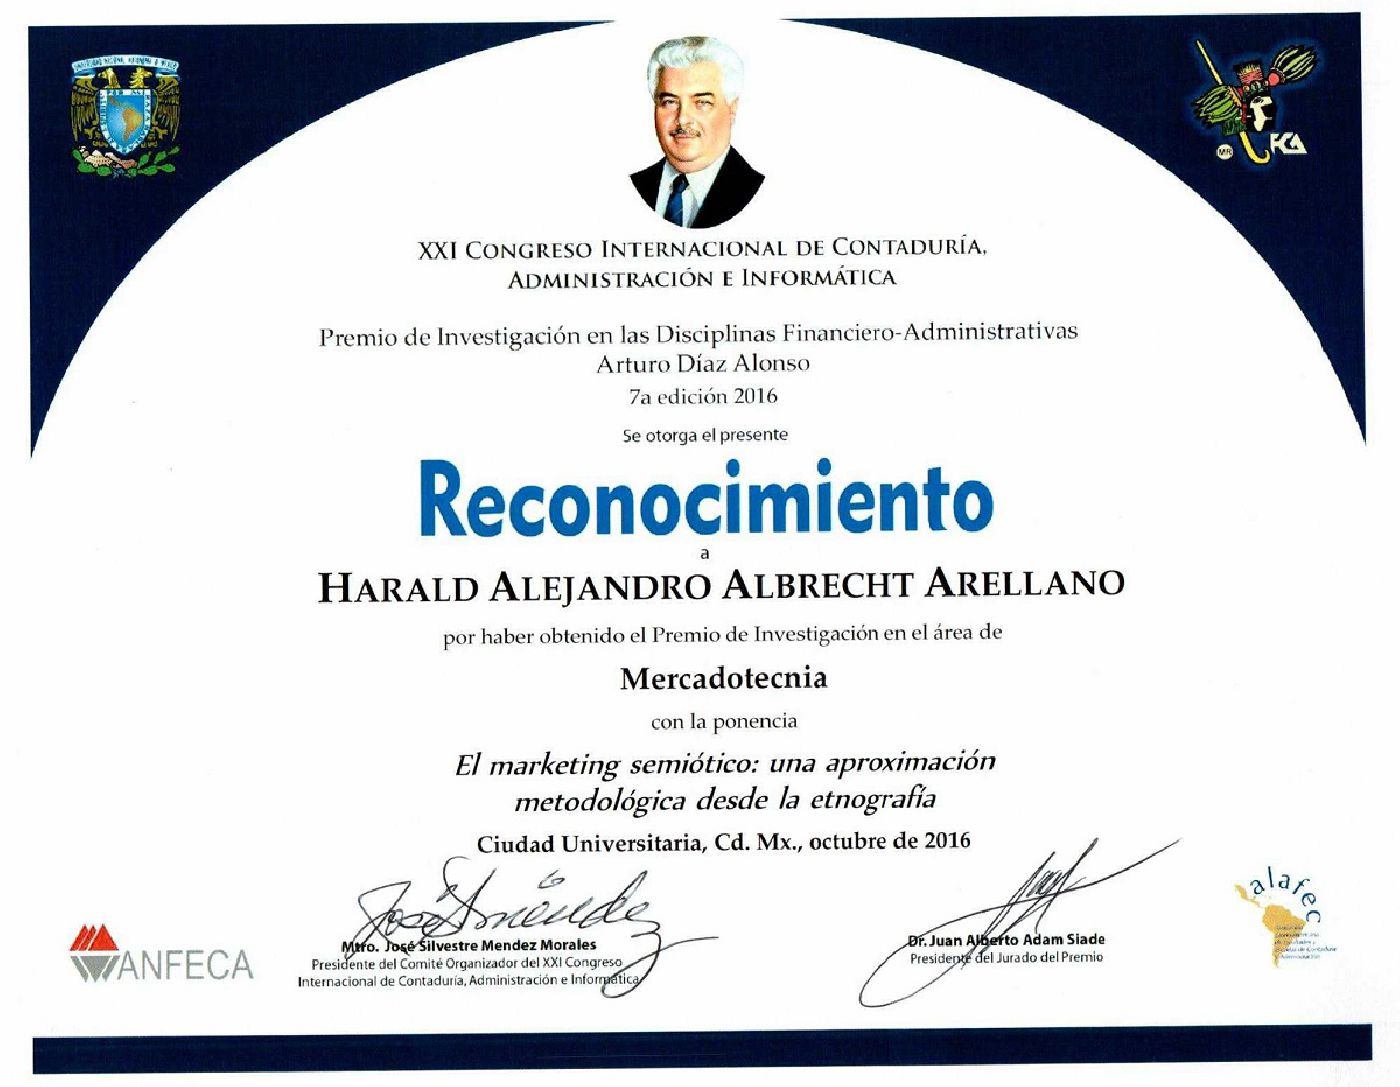 Premio “Arturo Díaz Alonso” al Profesor Harald Albrecht Arellano por Investigación en el área de Mercadotecnia